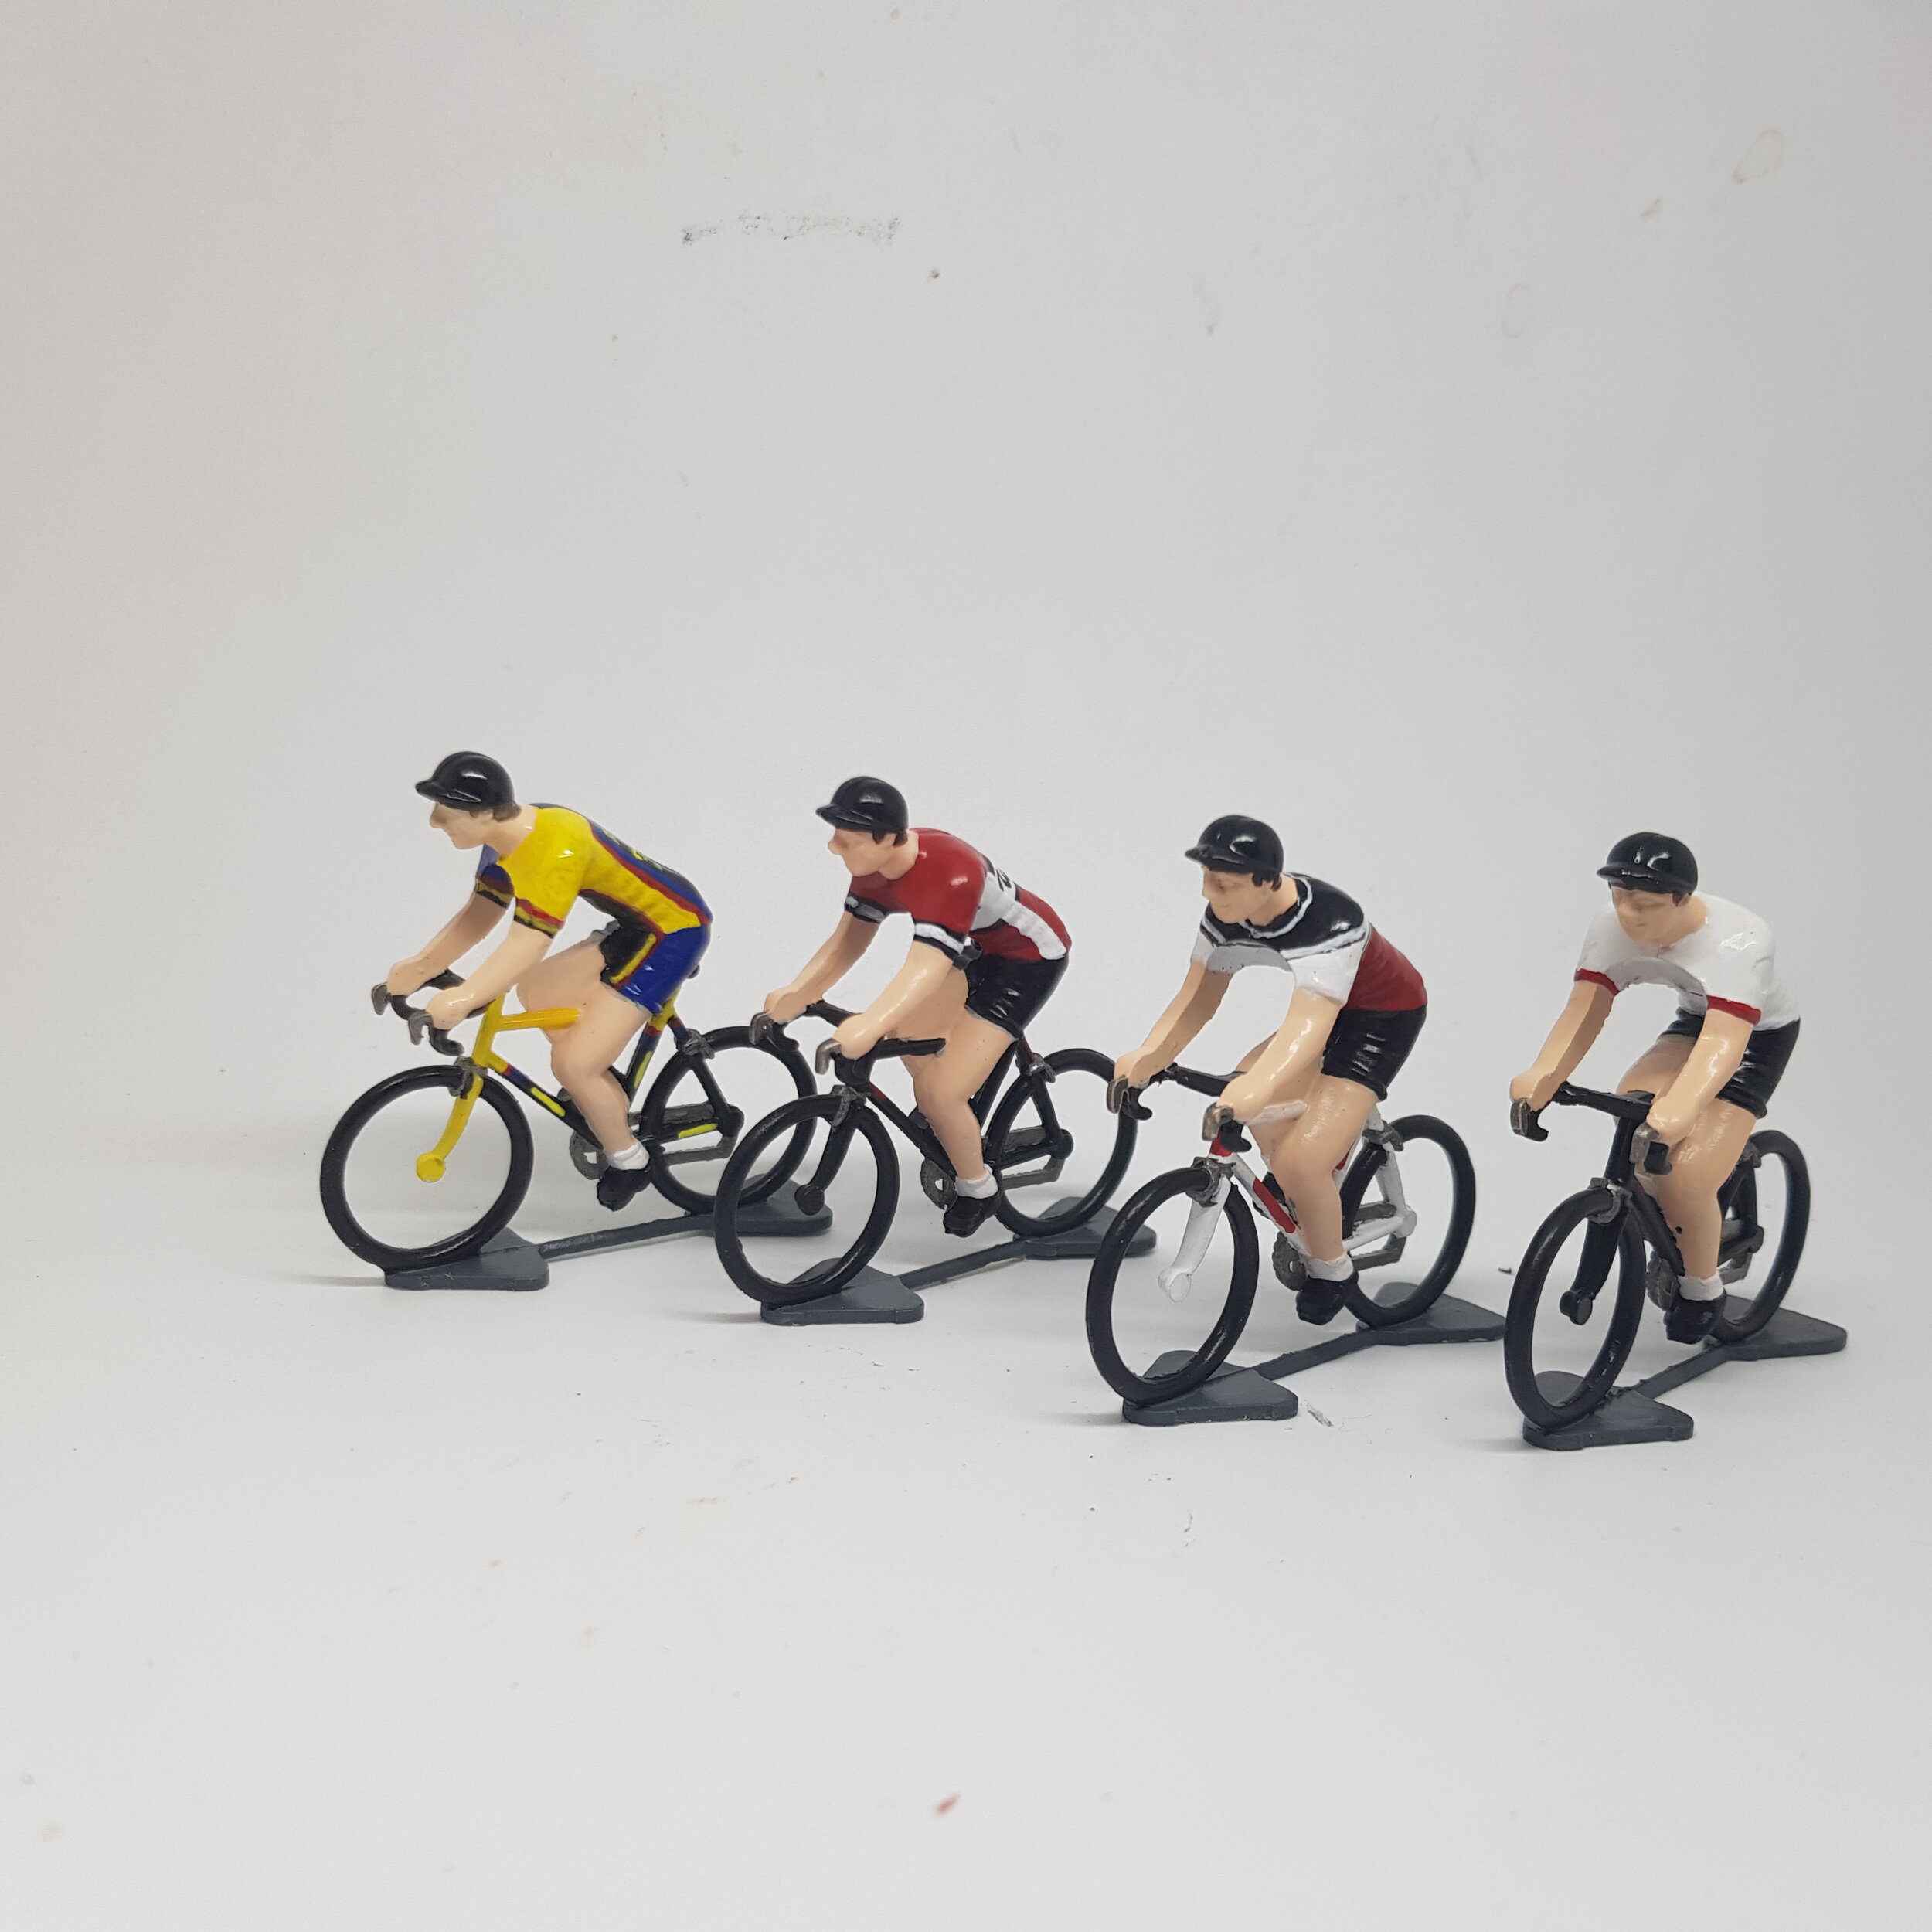 Figurine cyclist-exoletus figure 2020-ef pro cycling